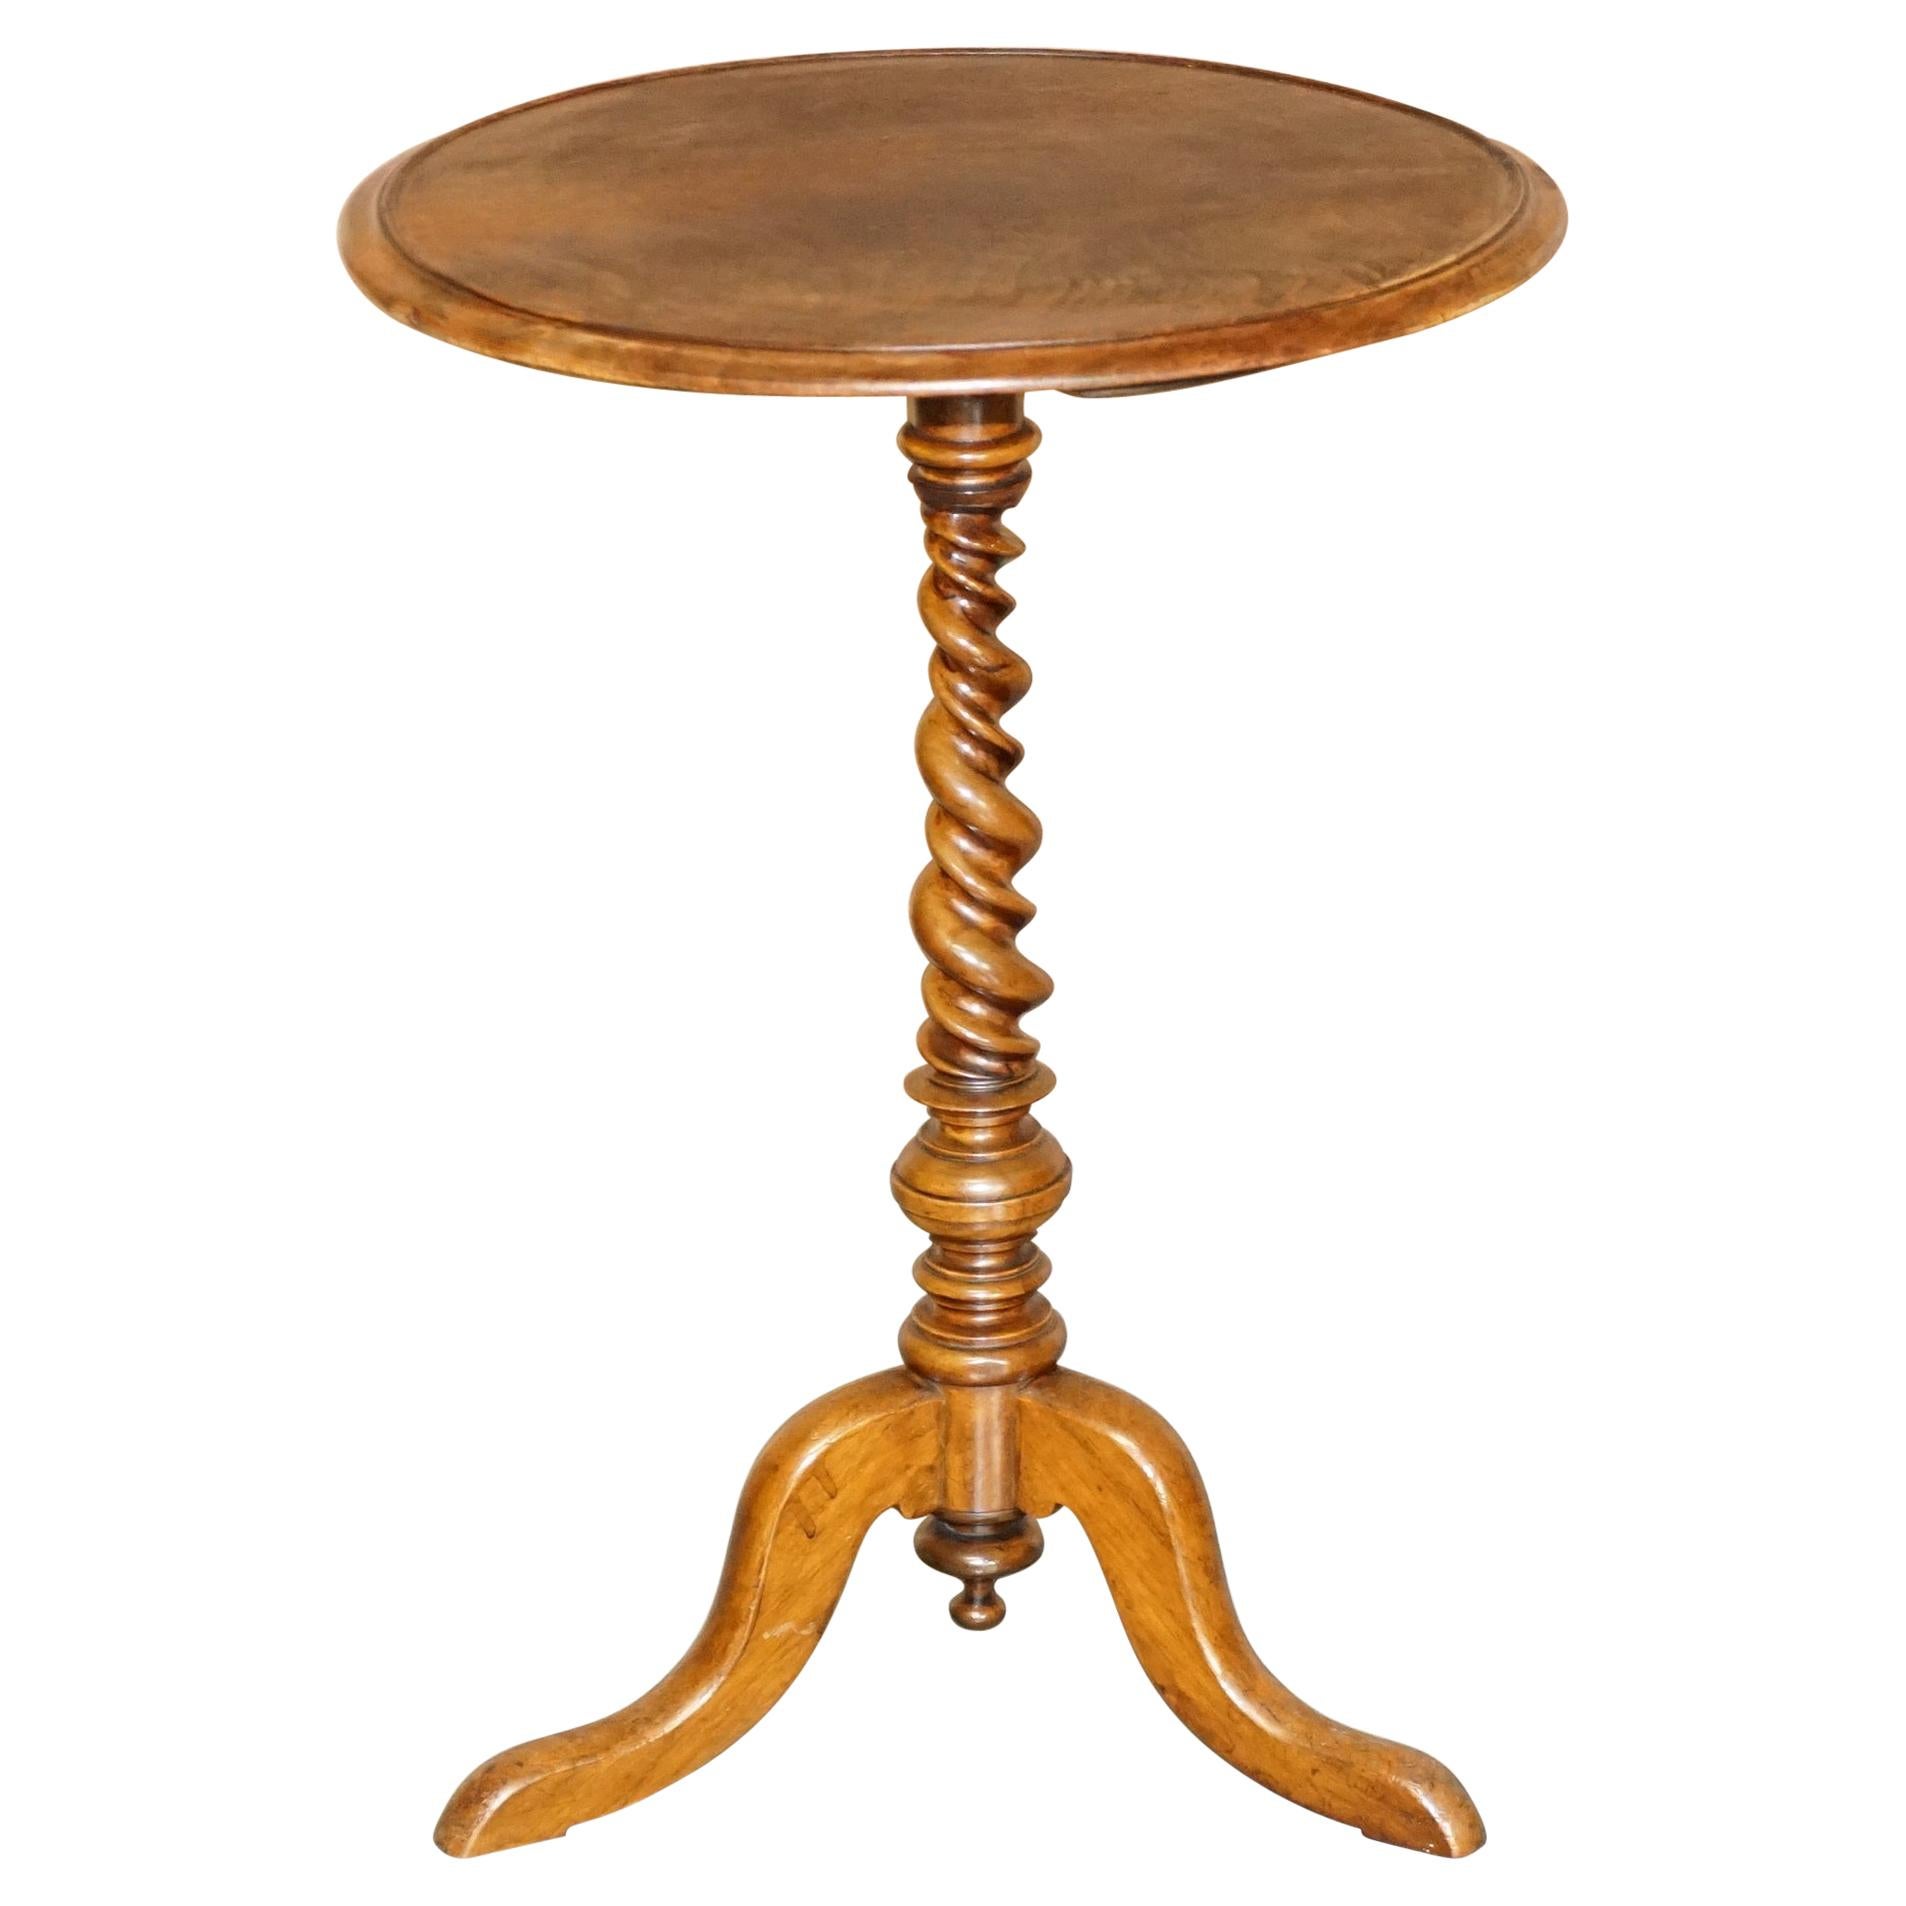 TABLE ANTIQUE STUNNINGe BARLEY TWIST COLUMN BASE TRIPOD LAMP END WiNE CIRCA 1860